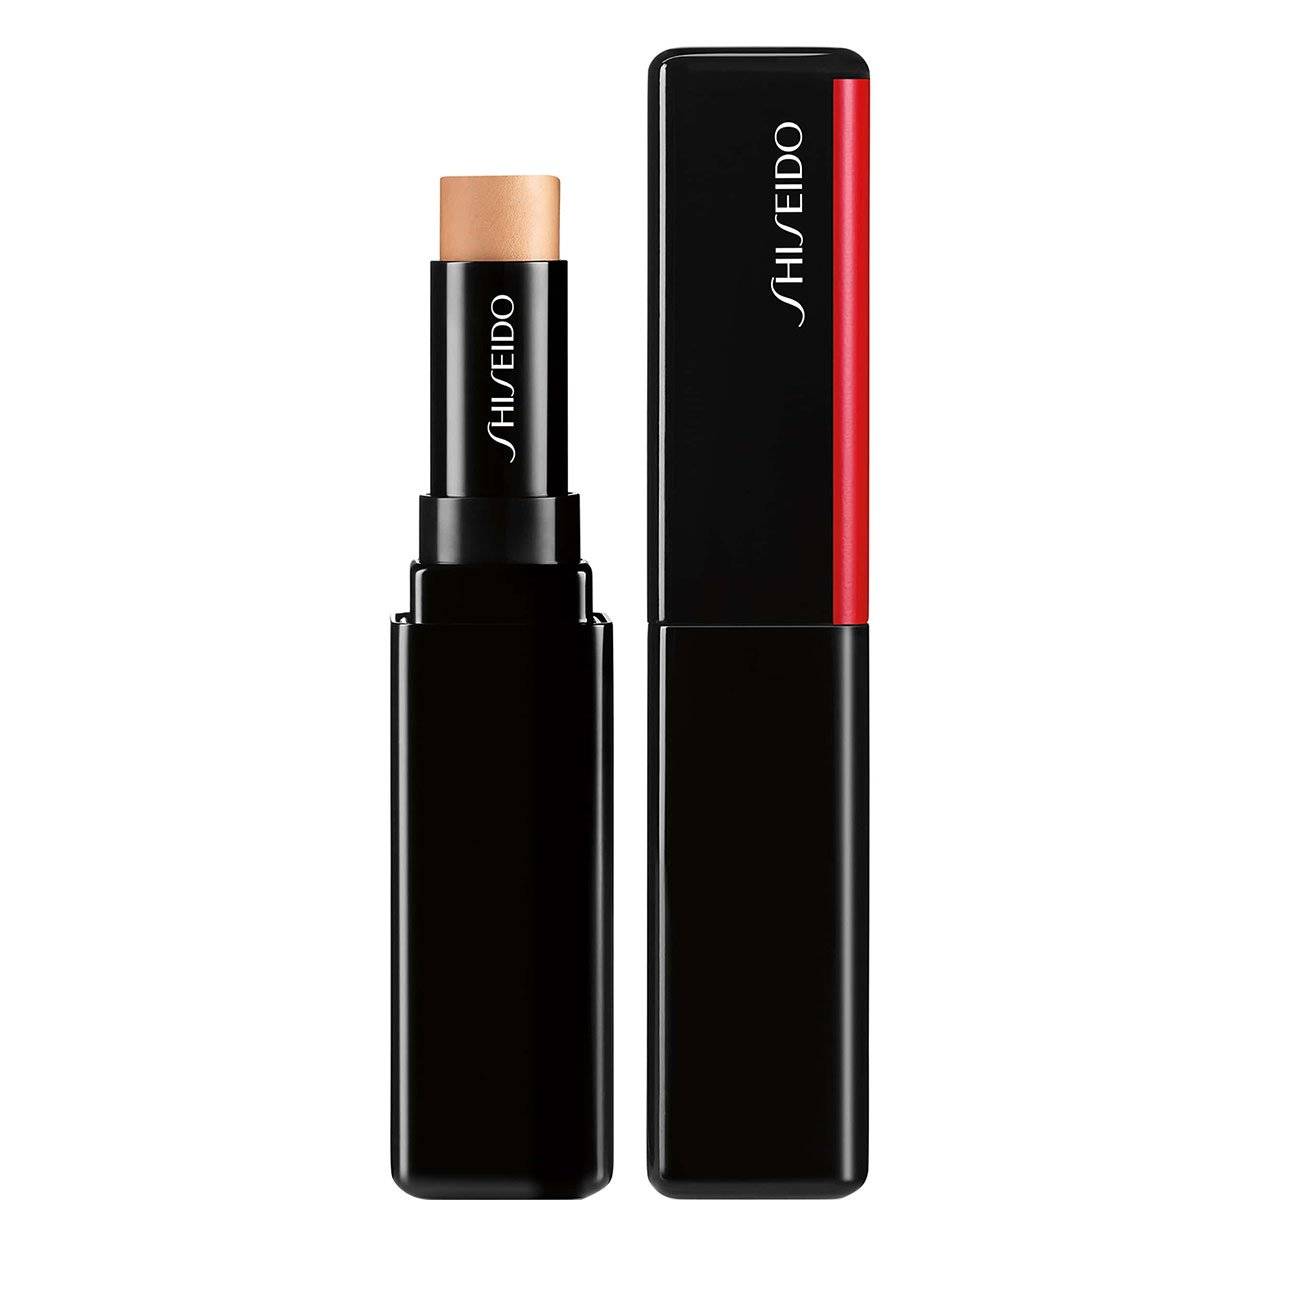 SYNCHRO SKIN CORRECTING GELSTICK 103 2.5gr Shiseido bestvalue.eu